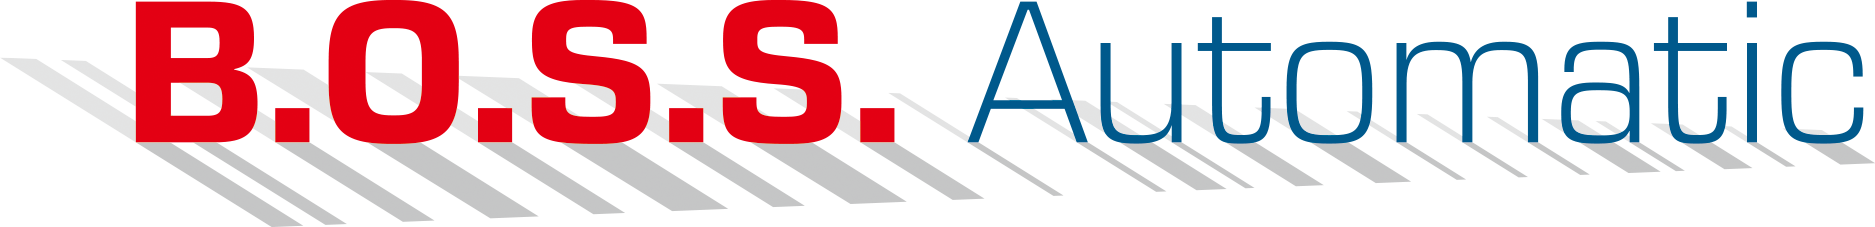 B.O.S.S. Automatic logo